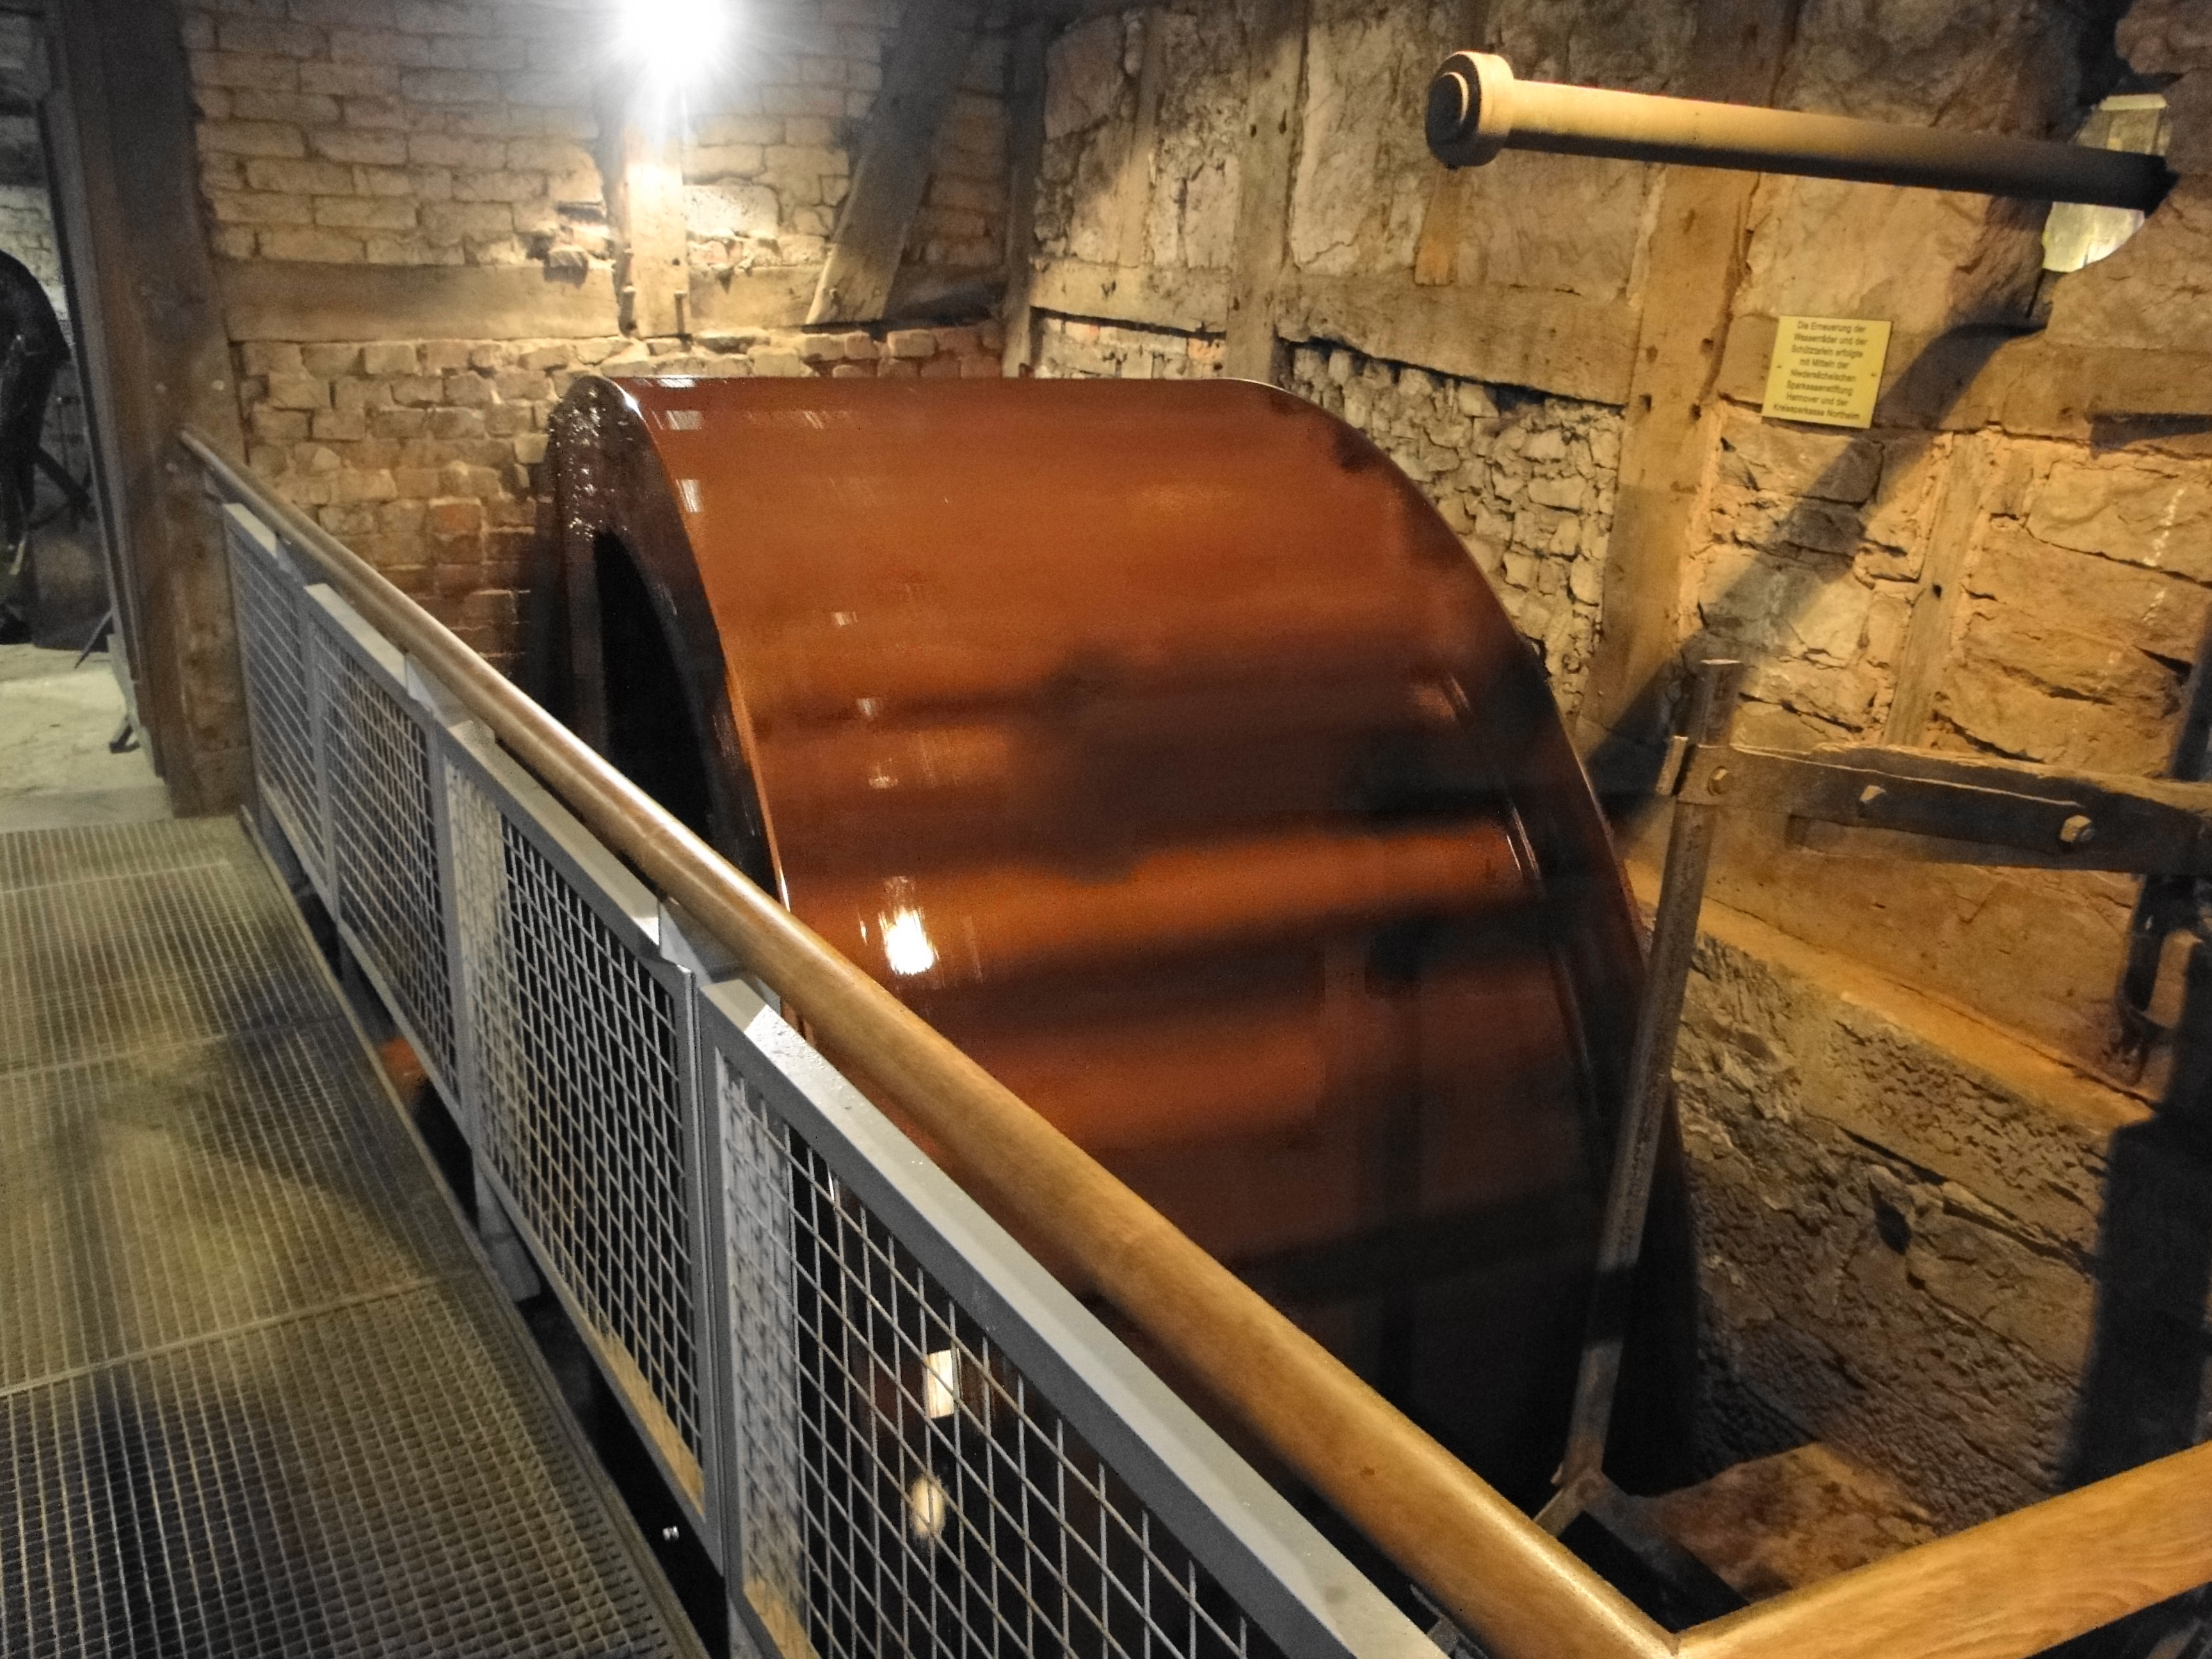 Historisches Technikmuseum Blankschmiede Neimke in Dassel, großes Wasserrad